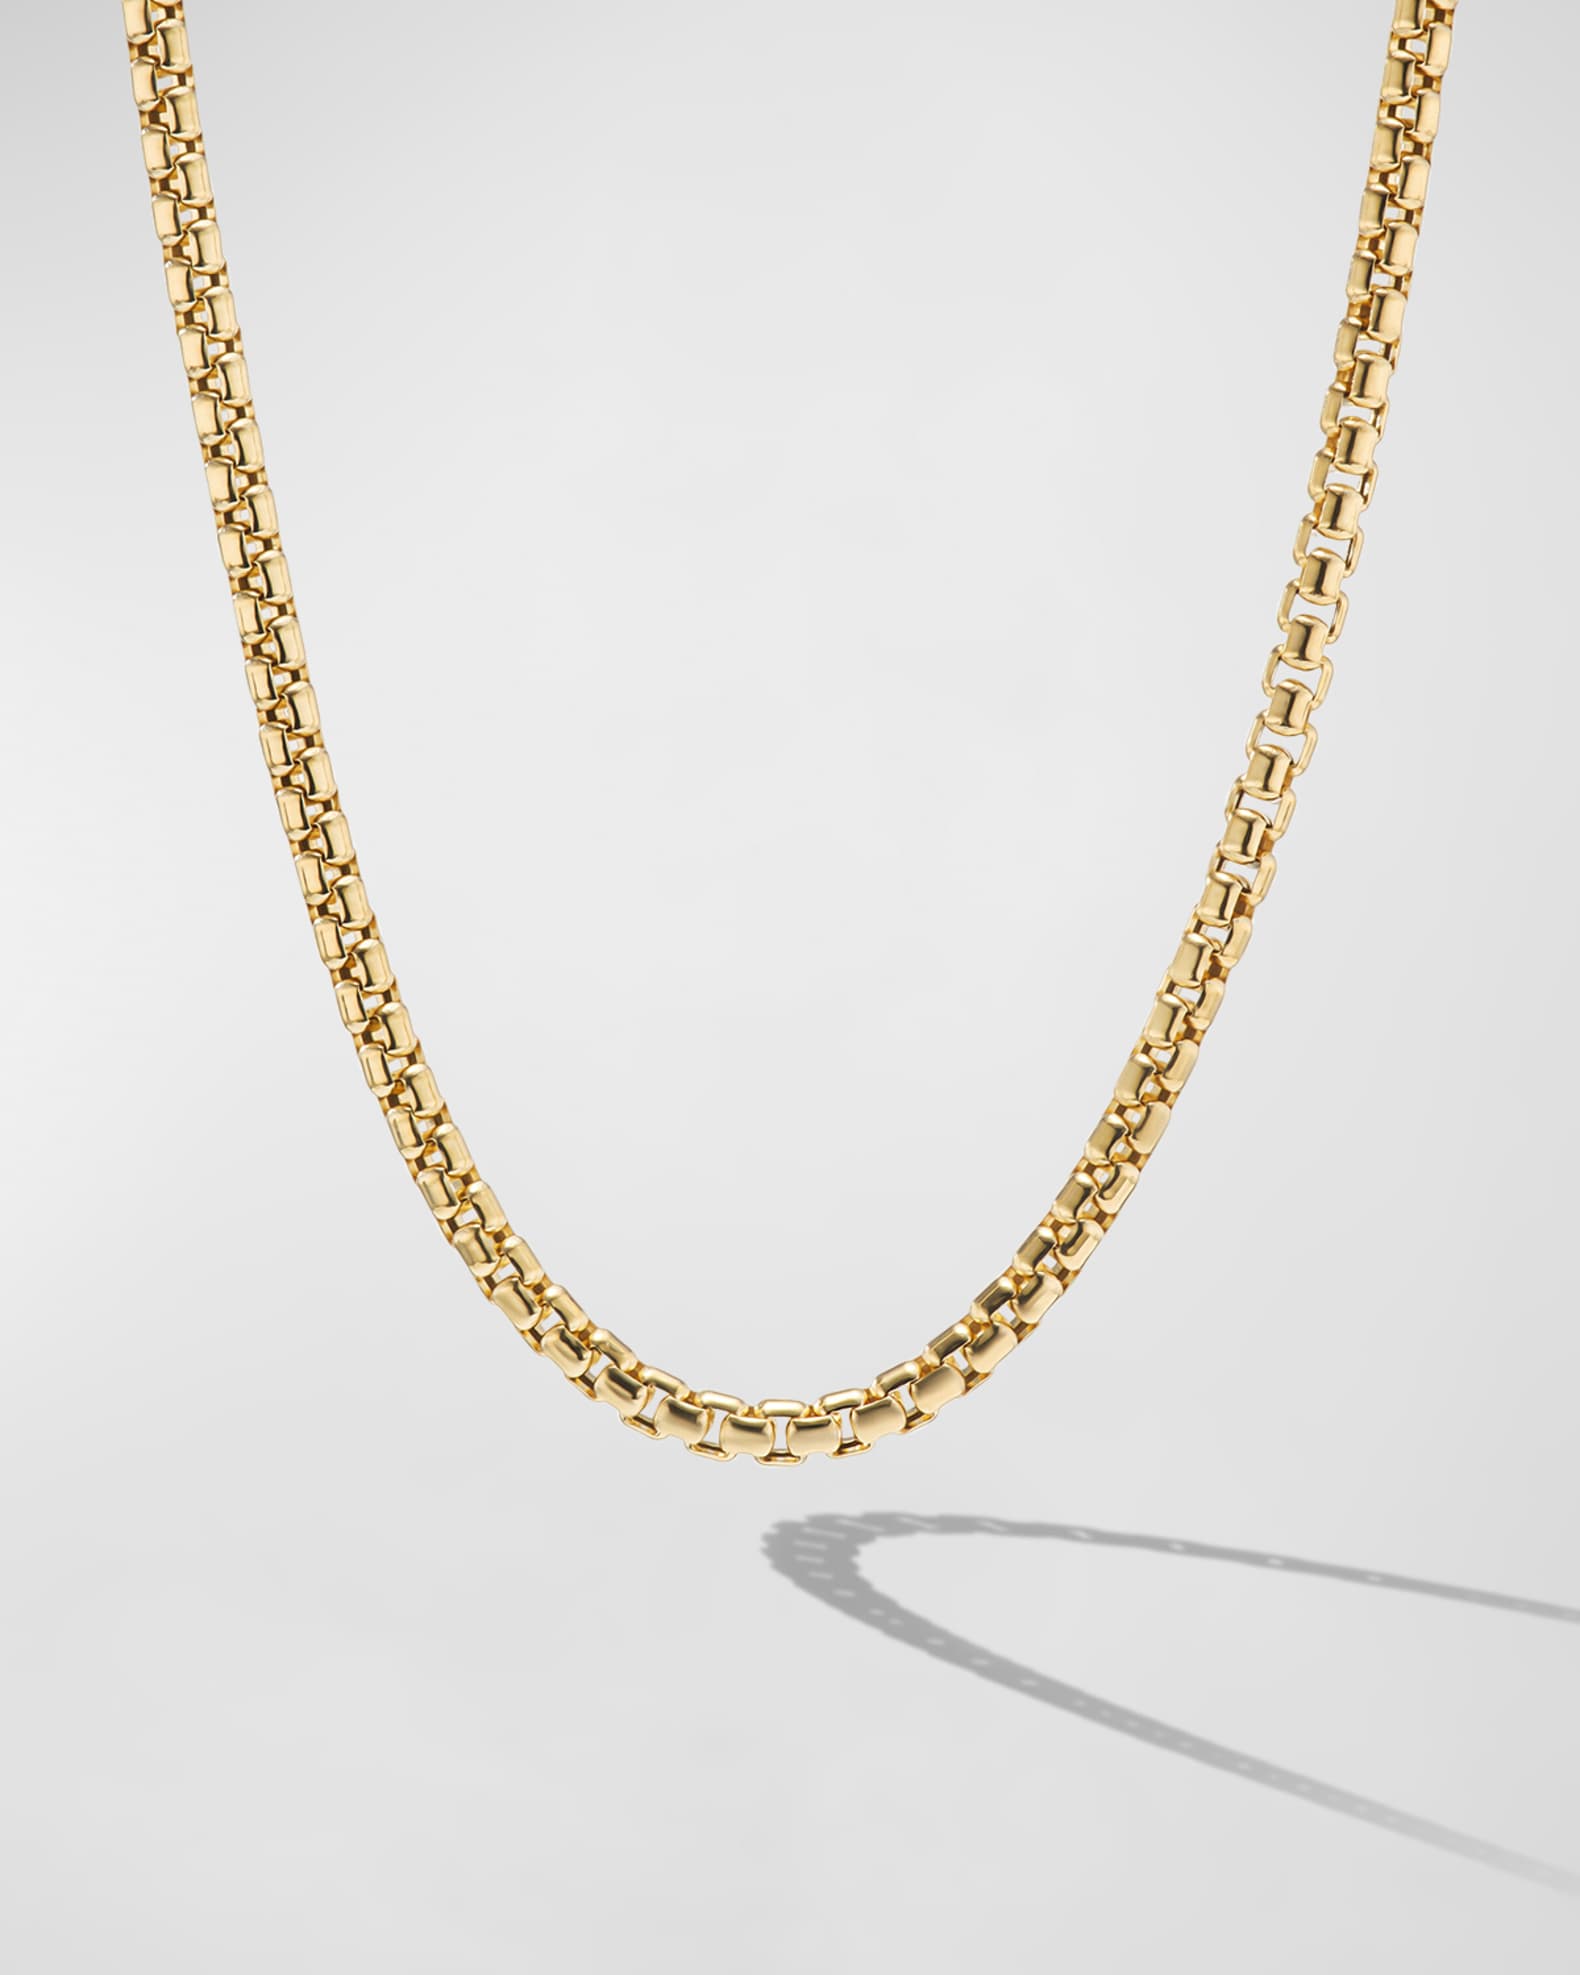 David Yurman Men's Box Chain Necklace in 18K Gold, 2.7m, 24